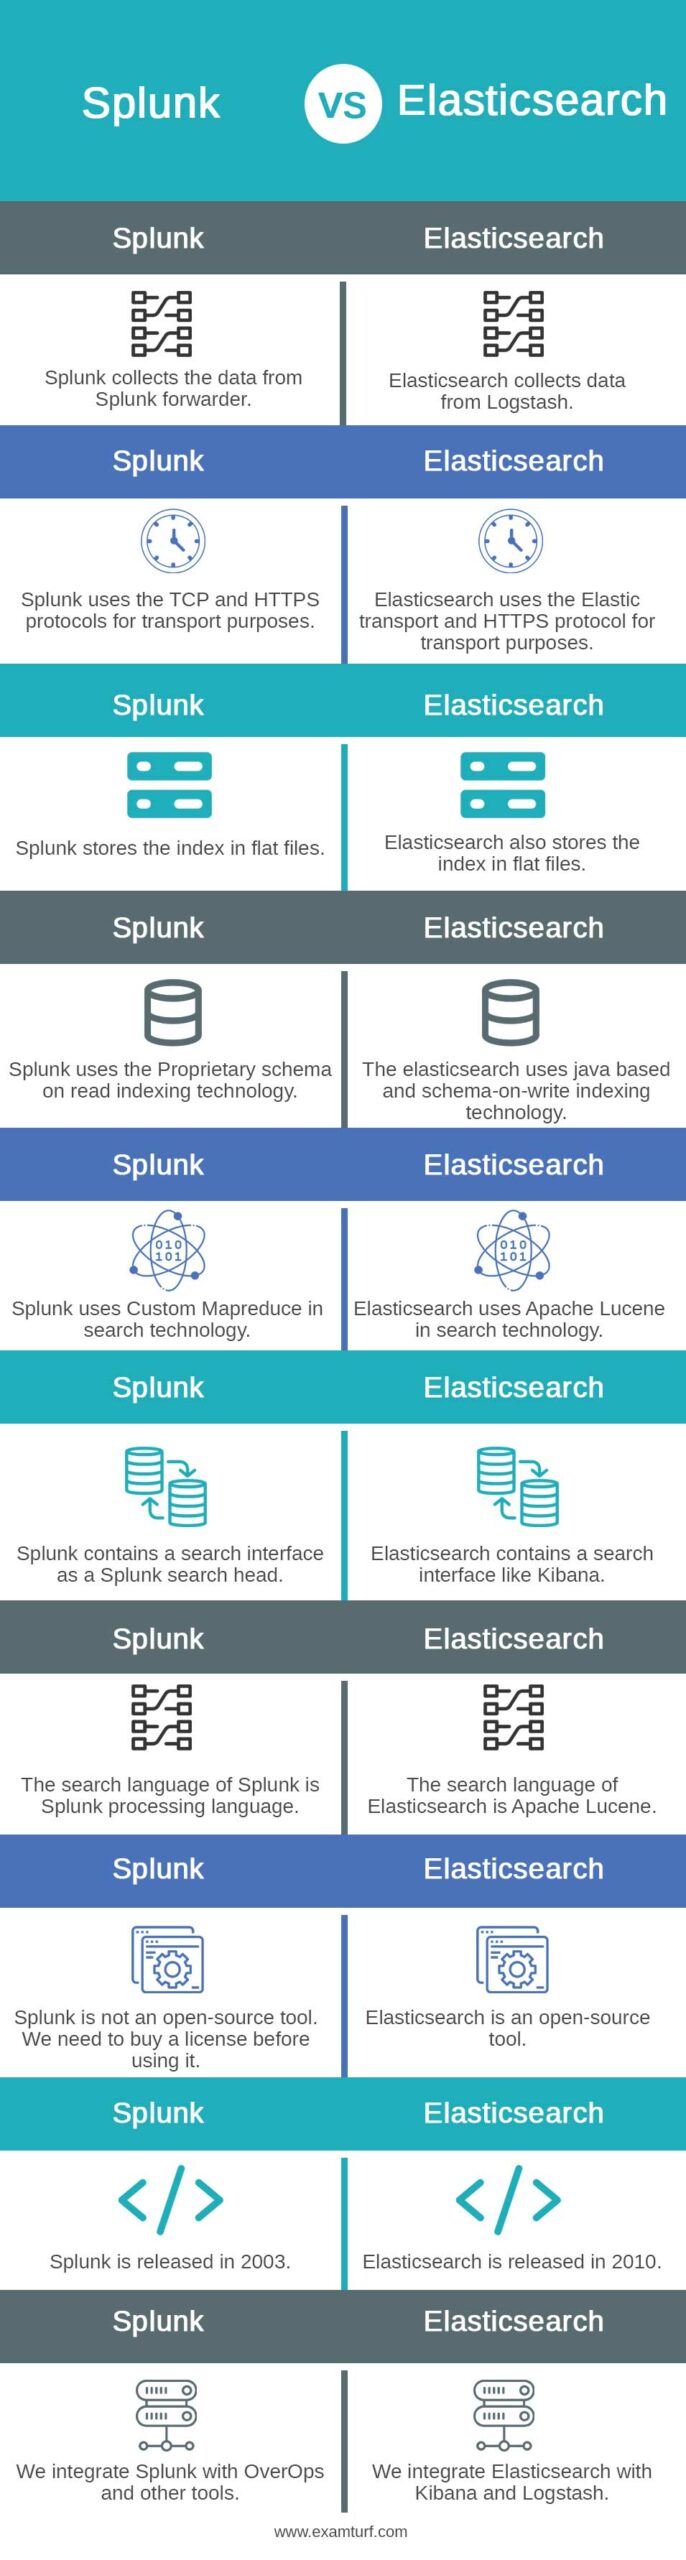 Splunk-vs-Elasticsearch-info